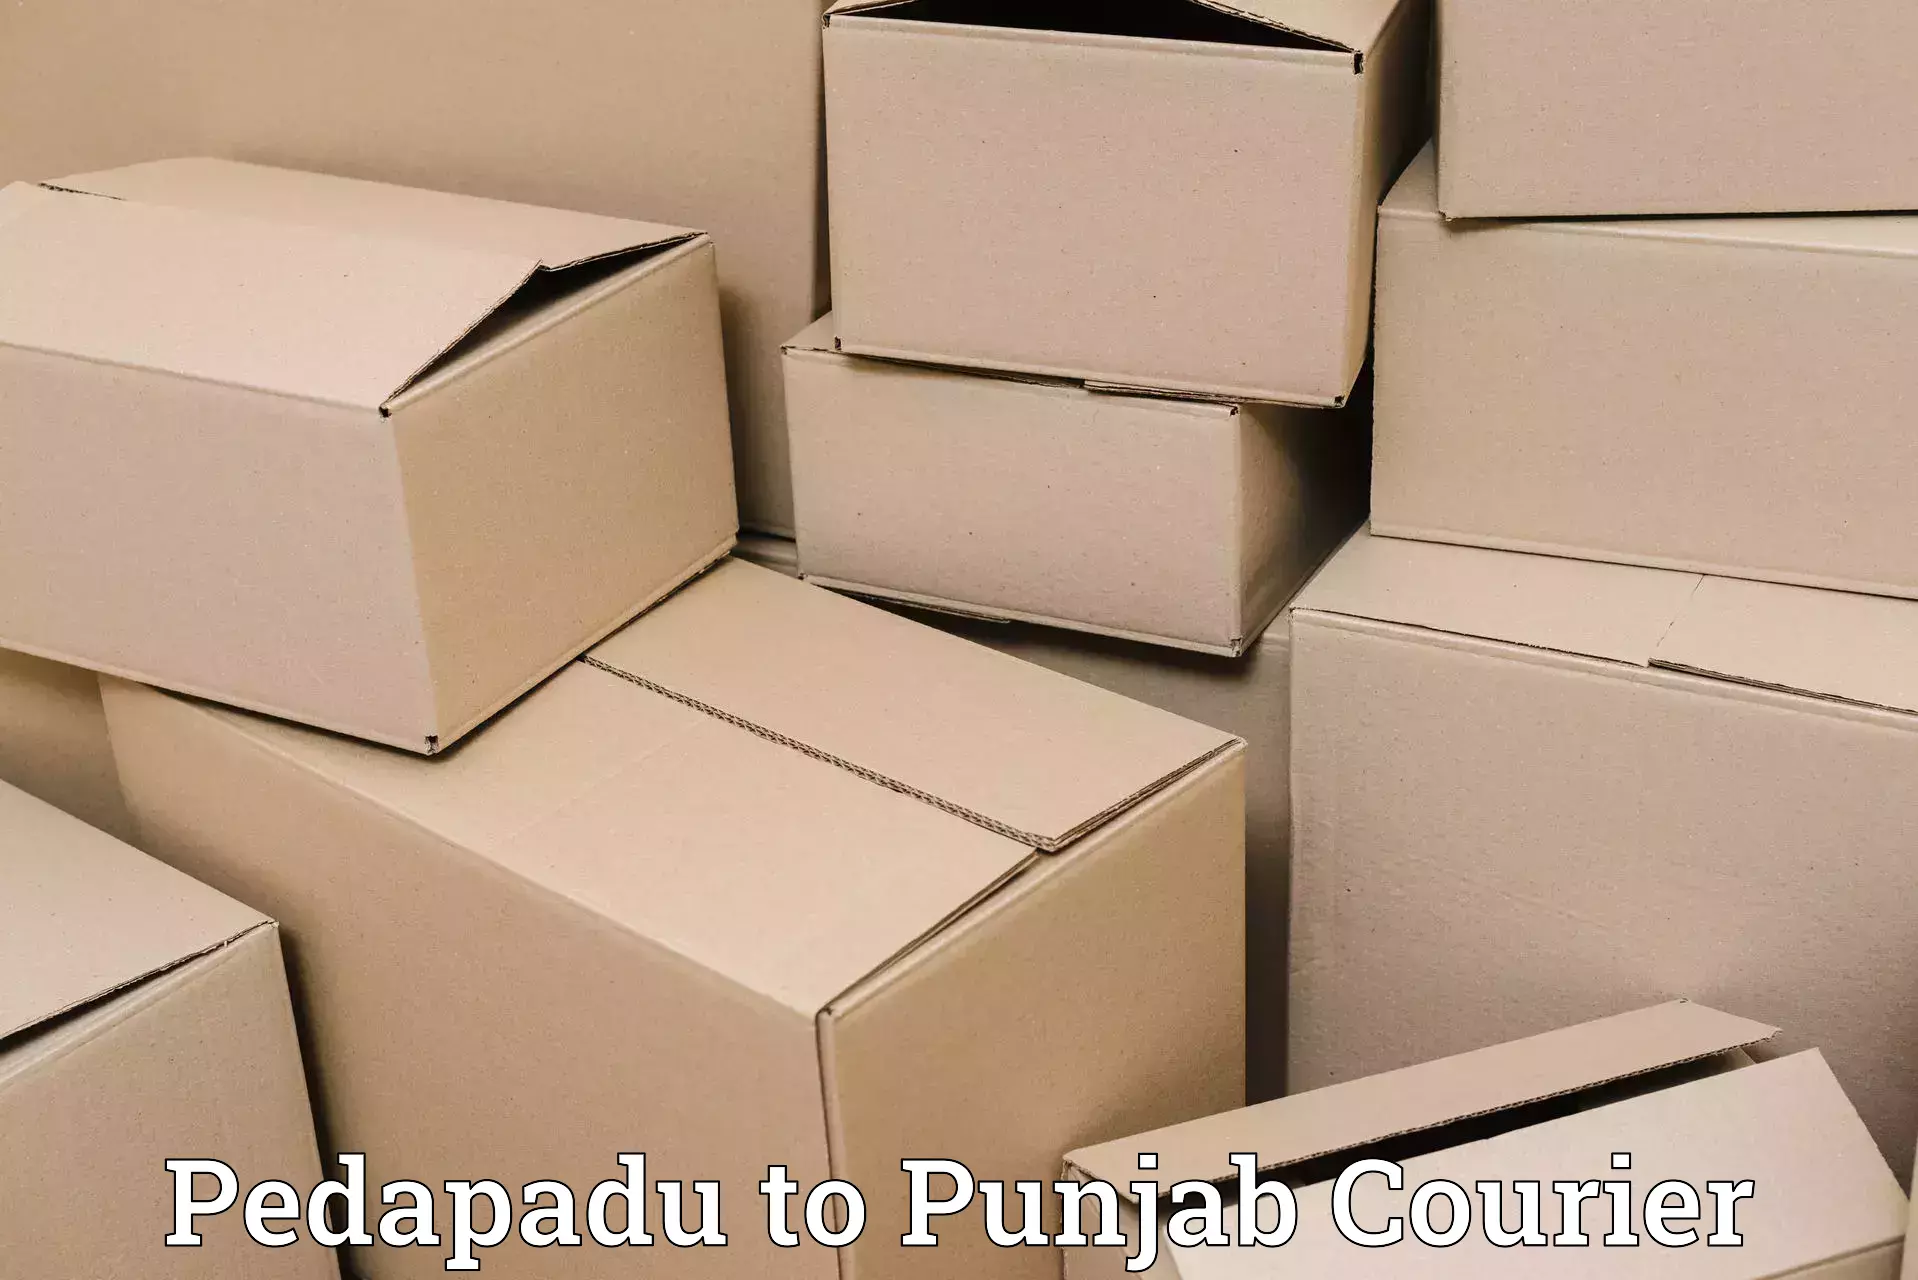 Efficient logistics management Pedapadu to Dhilwan